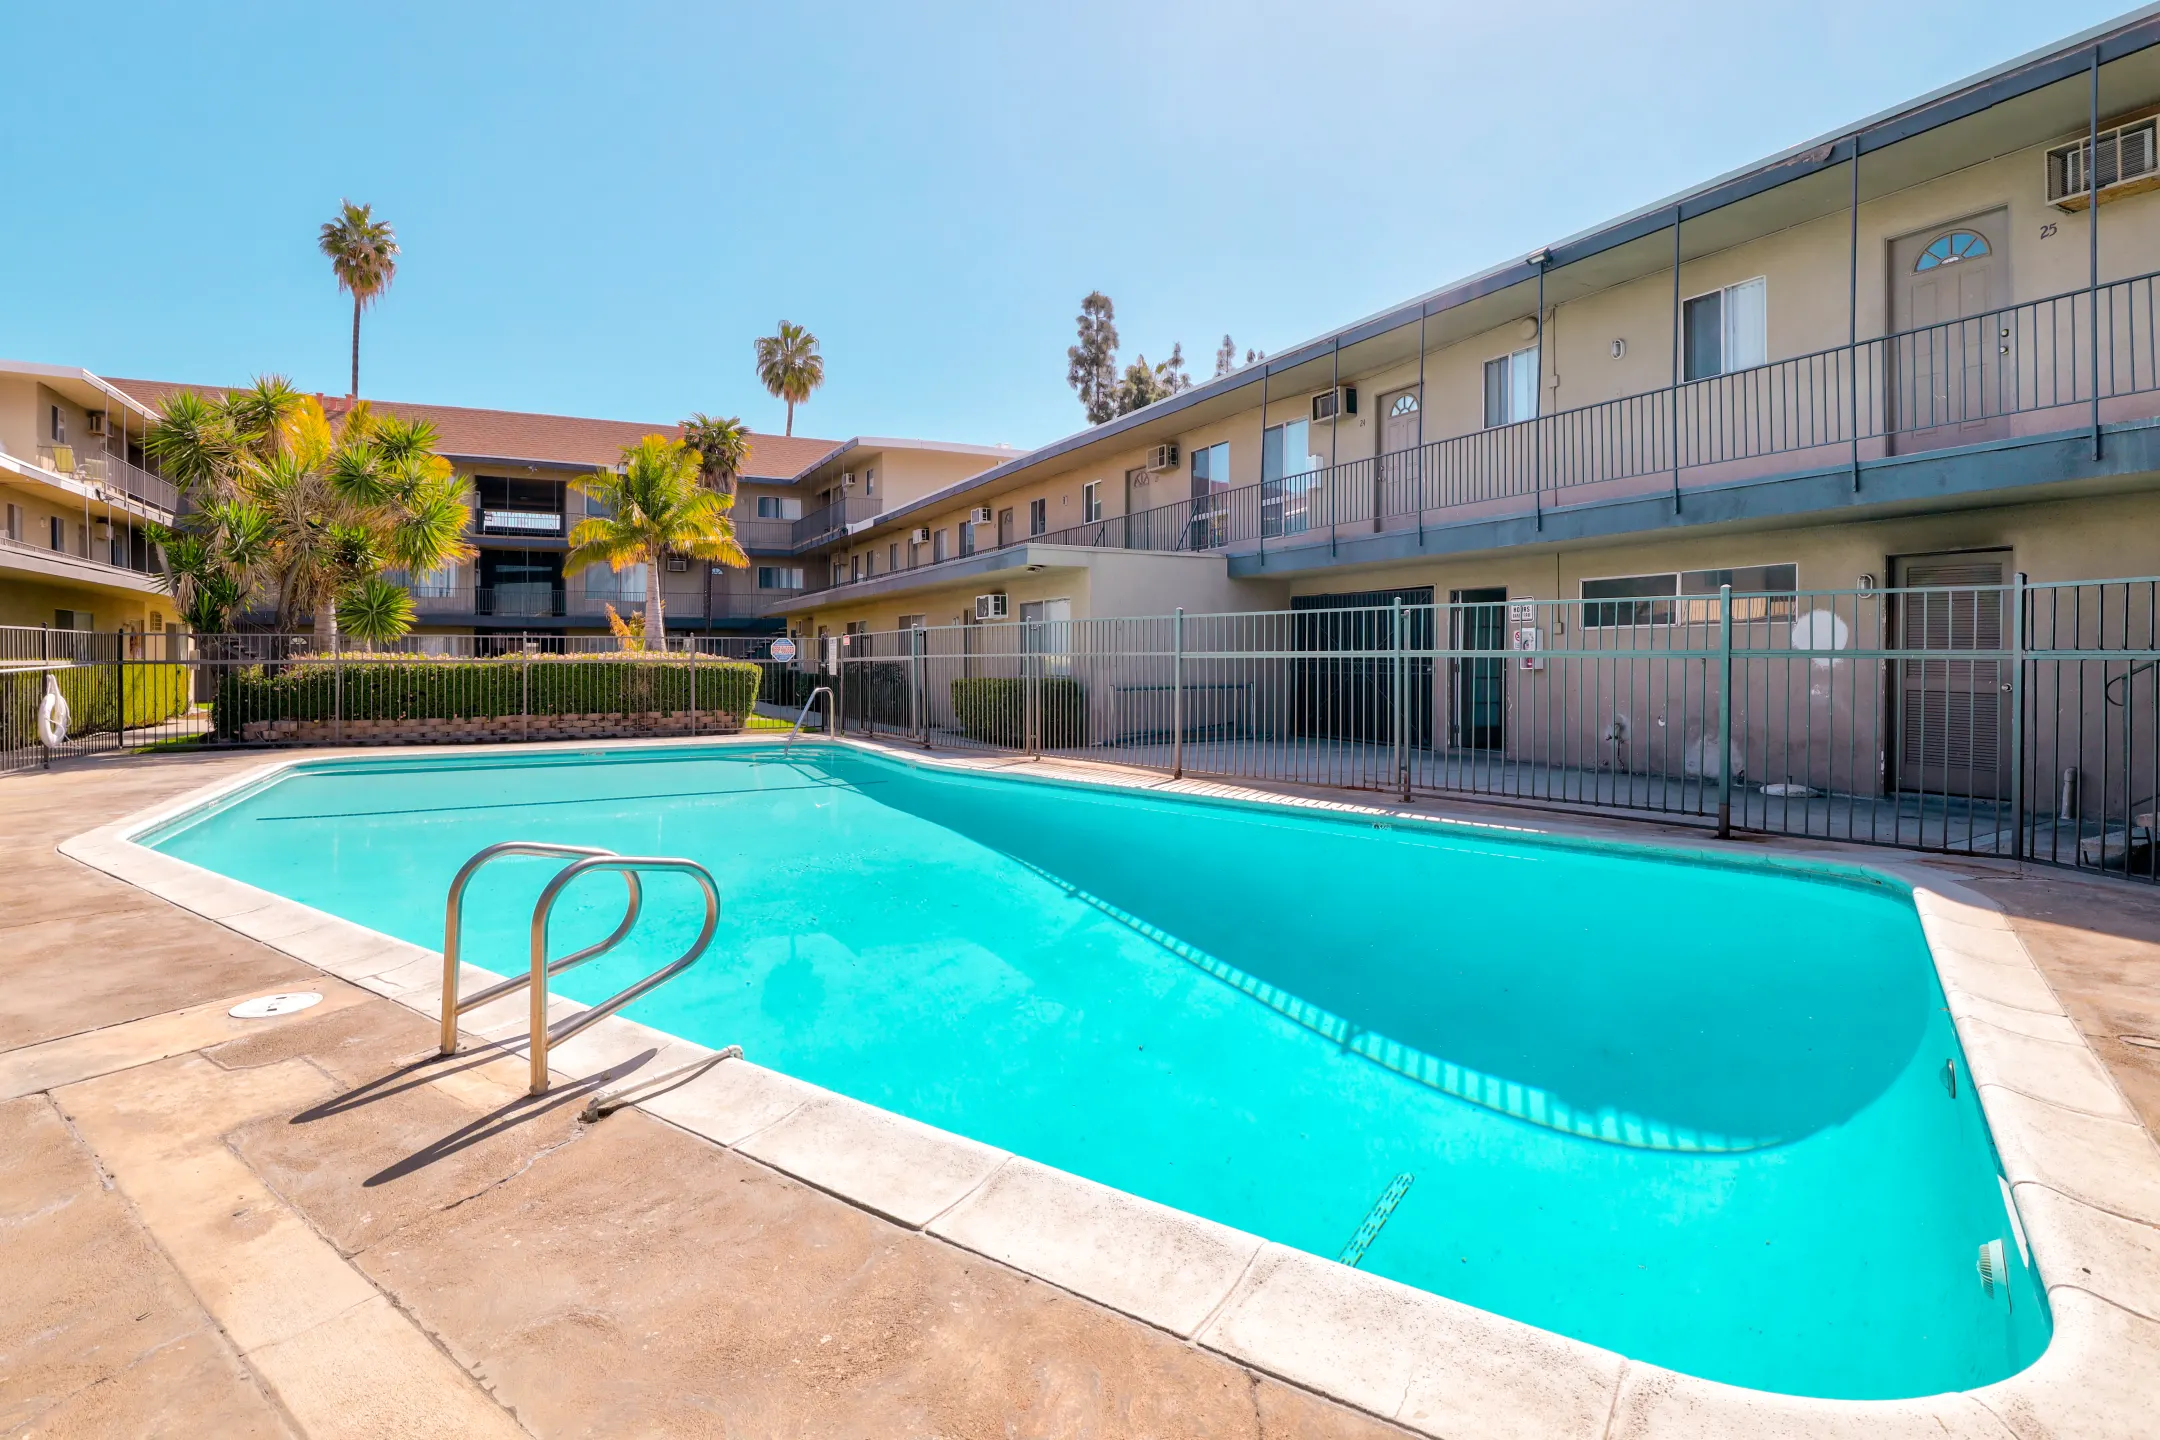 Pool - University Gardens - Riverside, CA